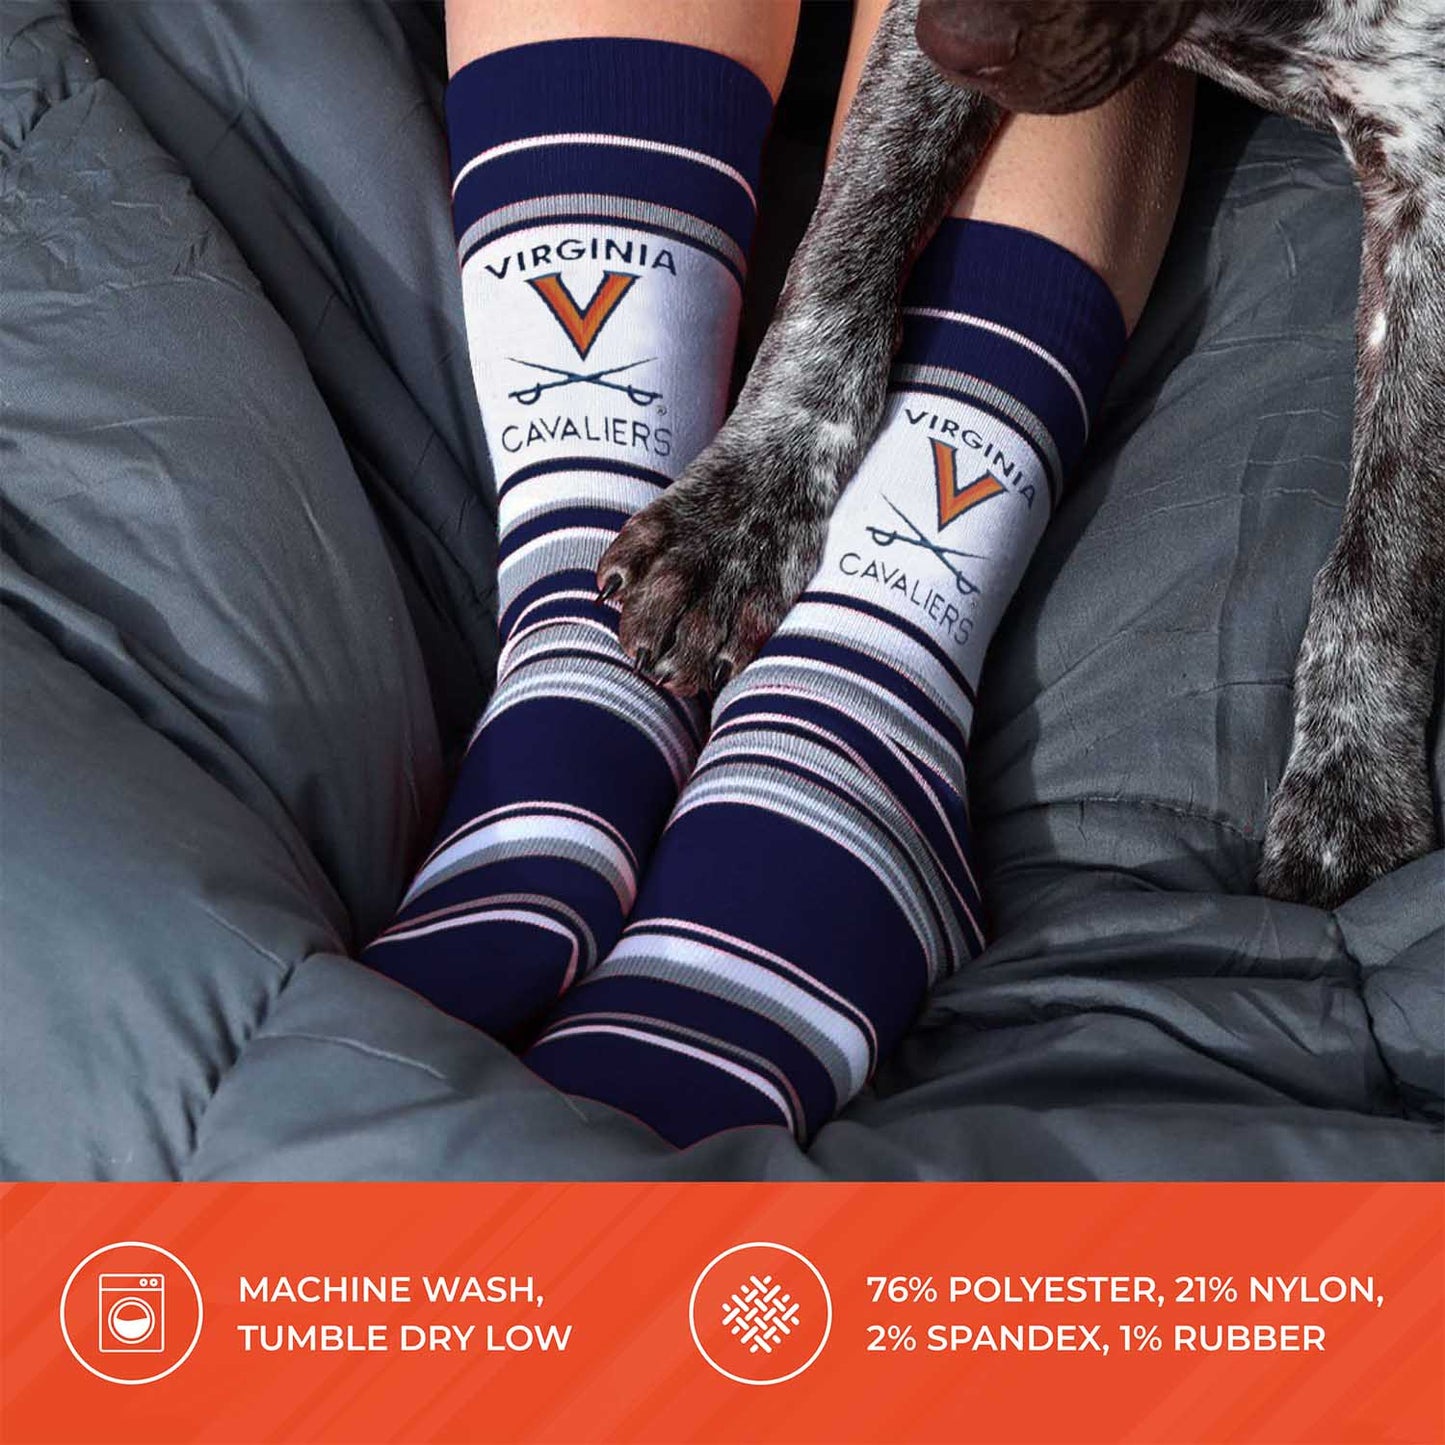 Virginia Cavaliers Collegiate University Striped Dress Socks - Navy